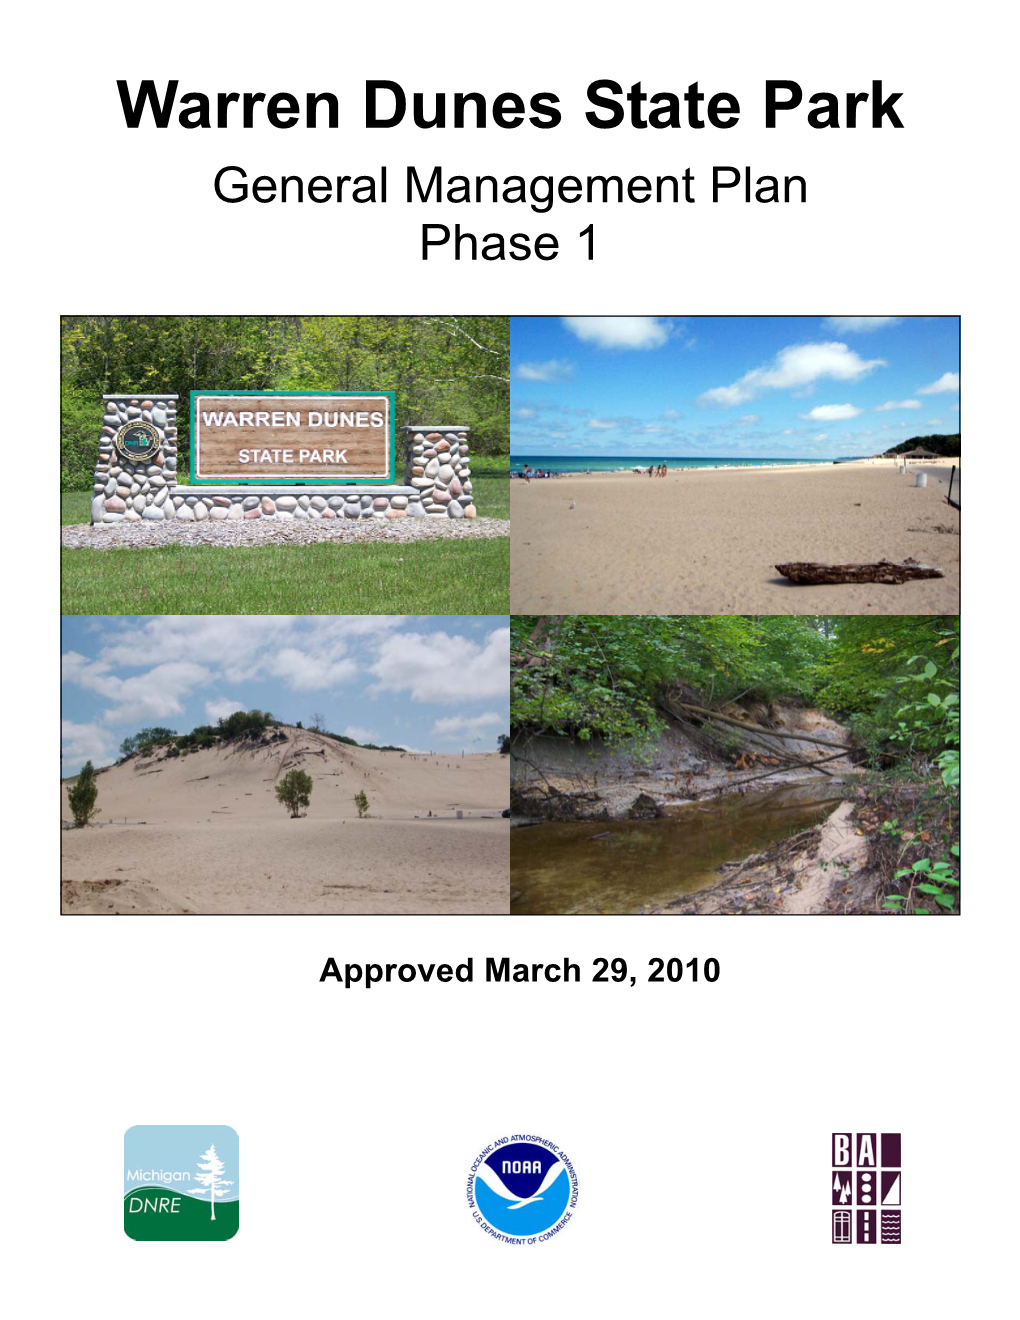 Warren Dunes State Park General Management Plan Phase 1